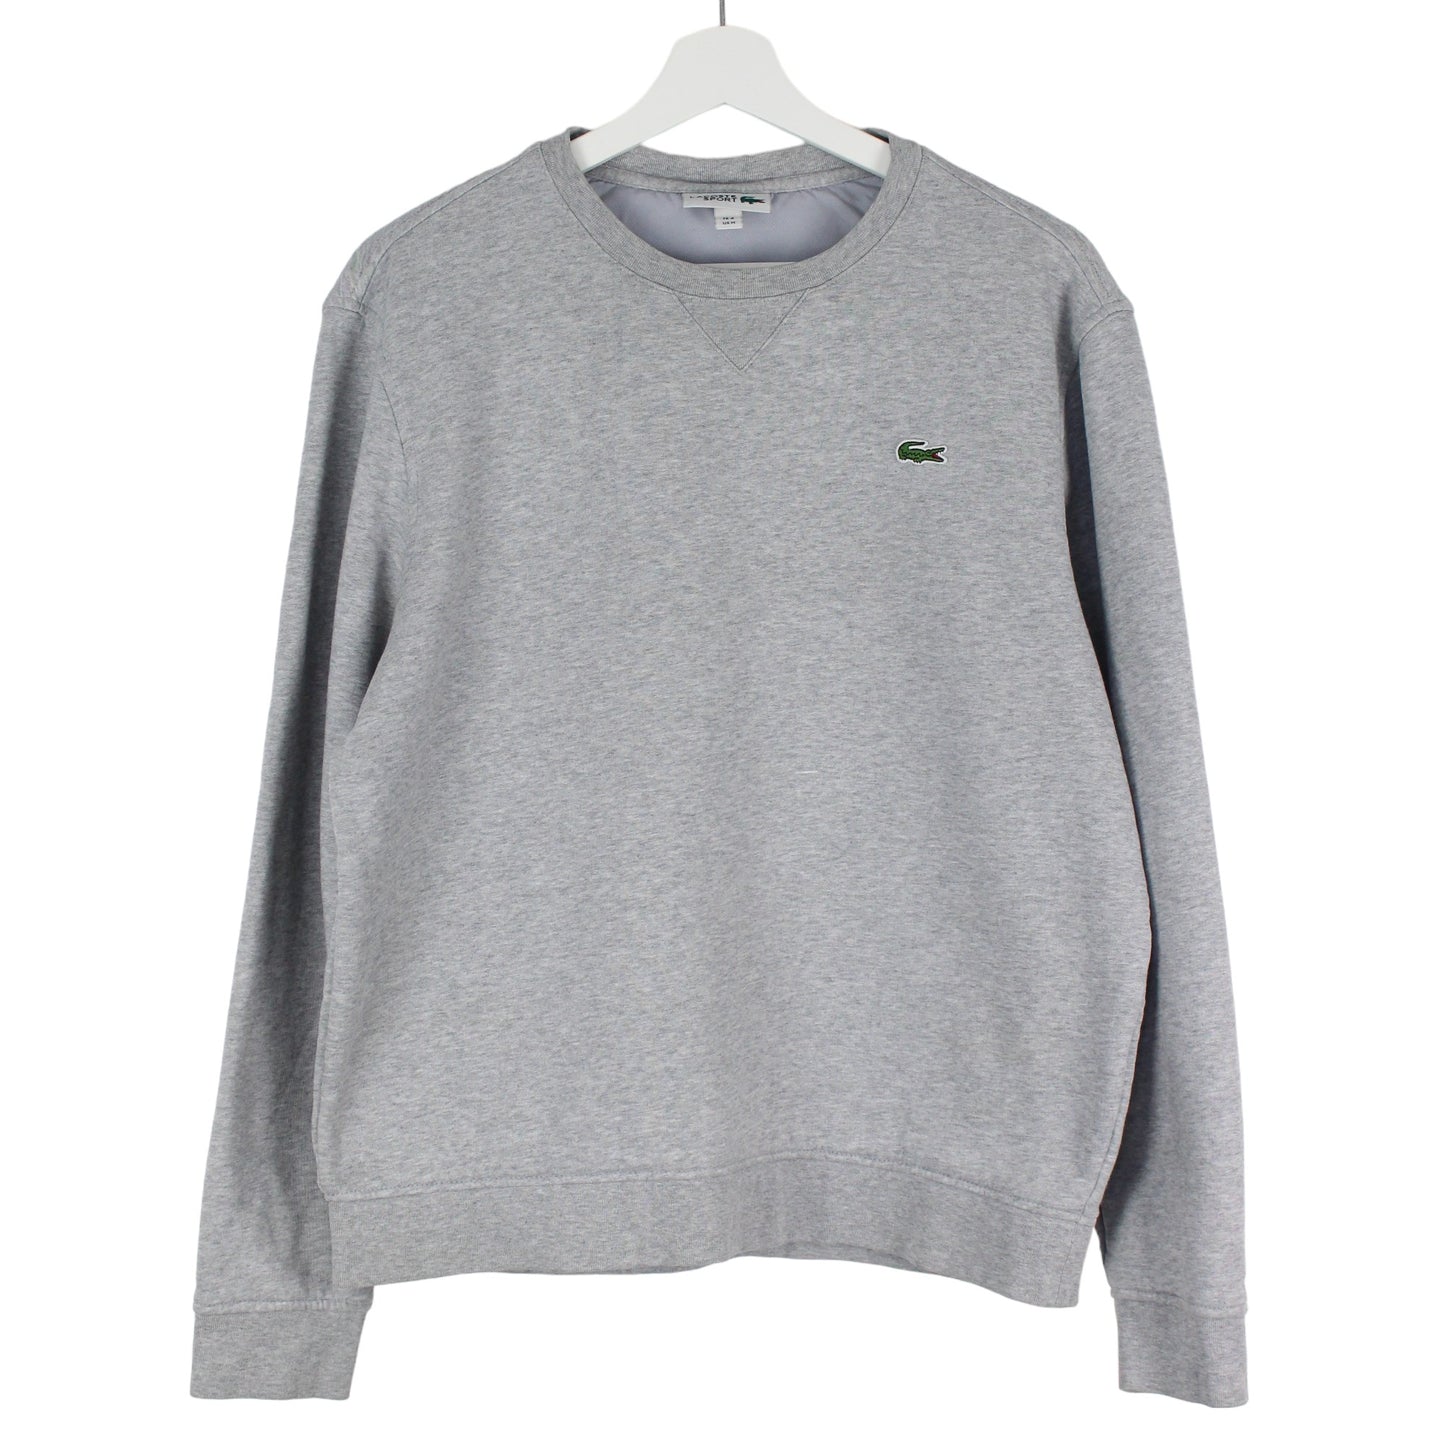 Lacoste Grey Sweatshirt (S)